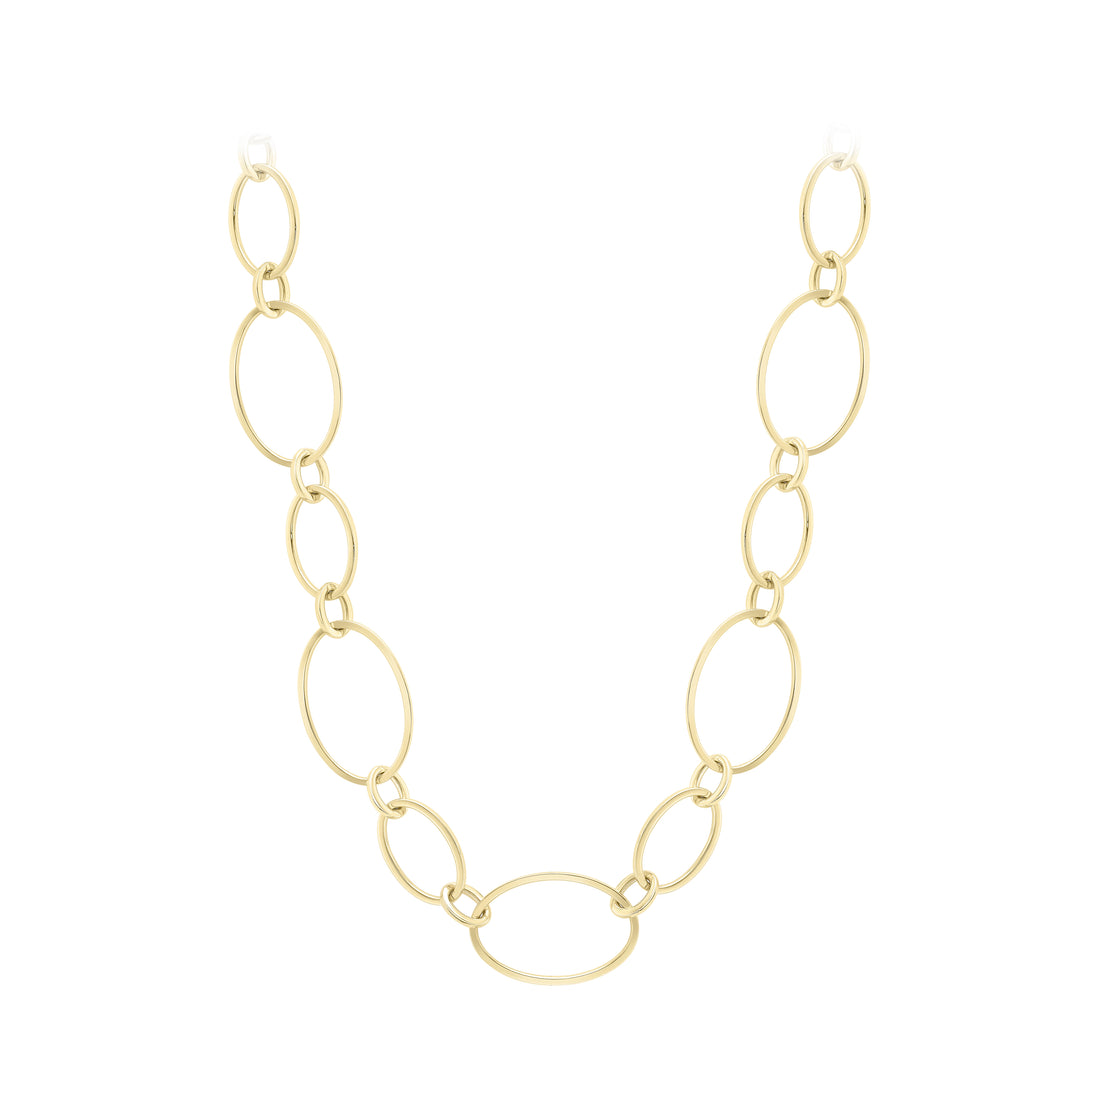 9ct. Yellow Gold Open Link Necklace - Robert Anthony Jewellers, Edinburgh